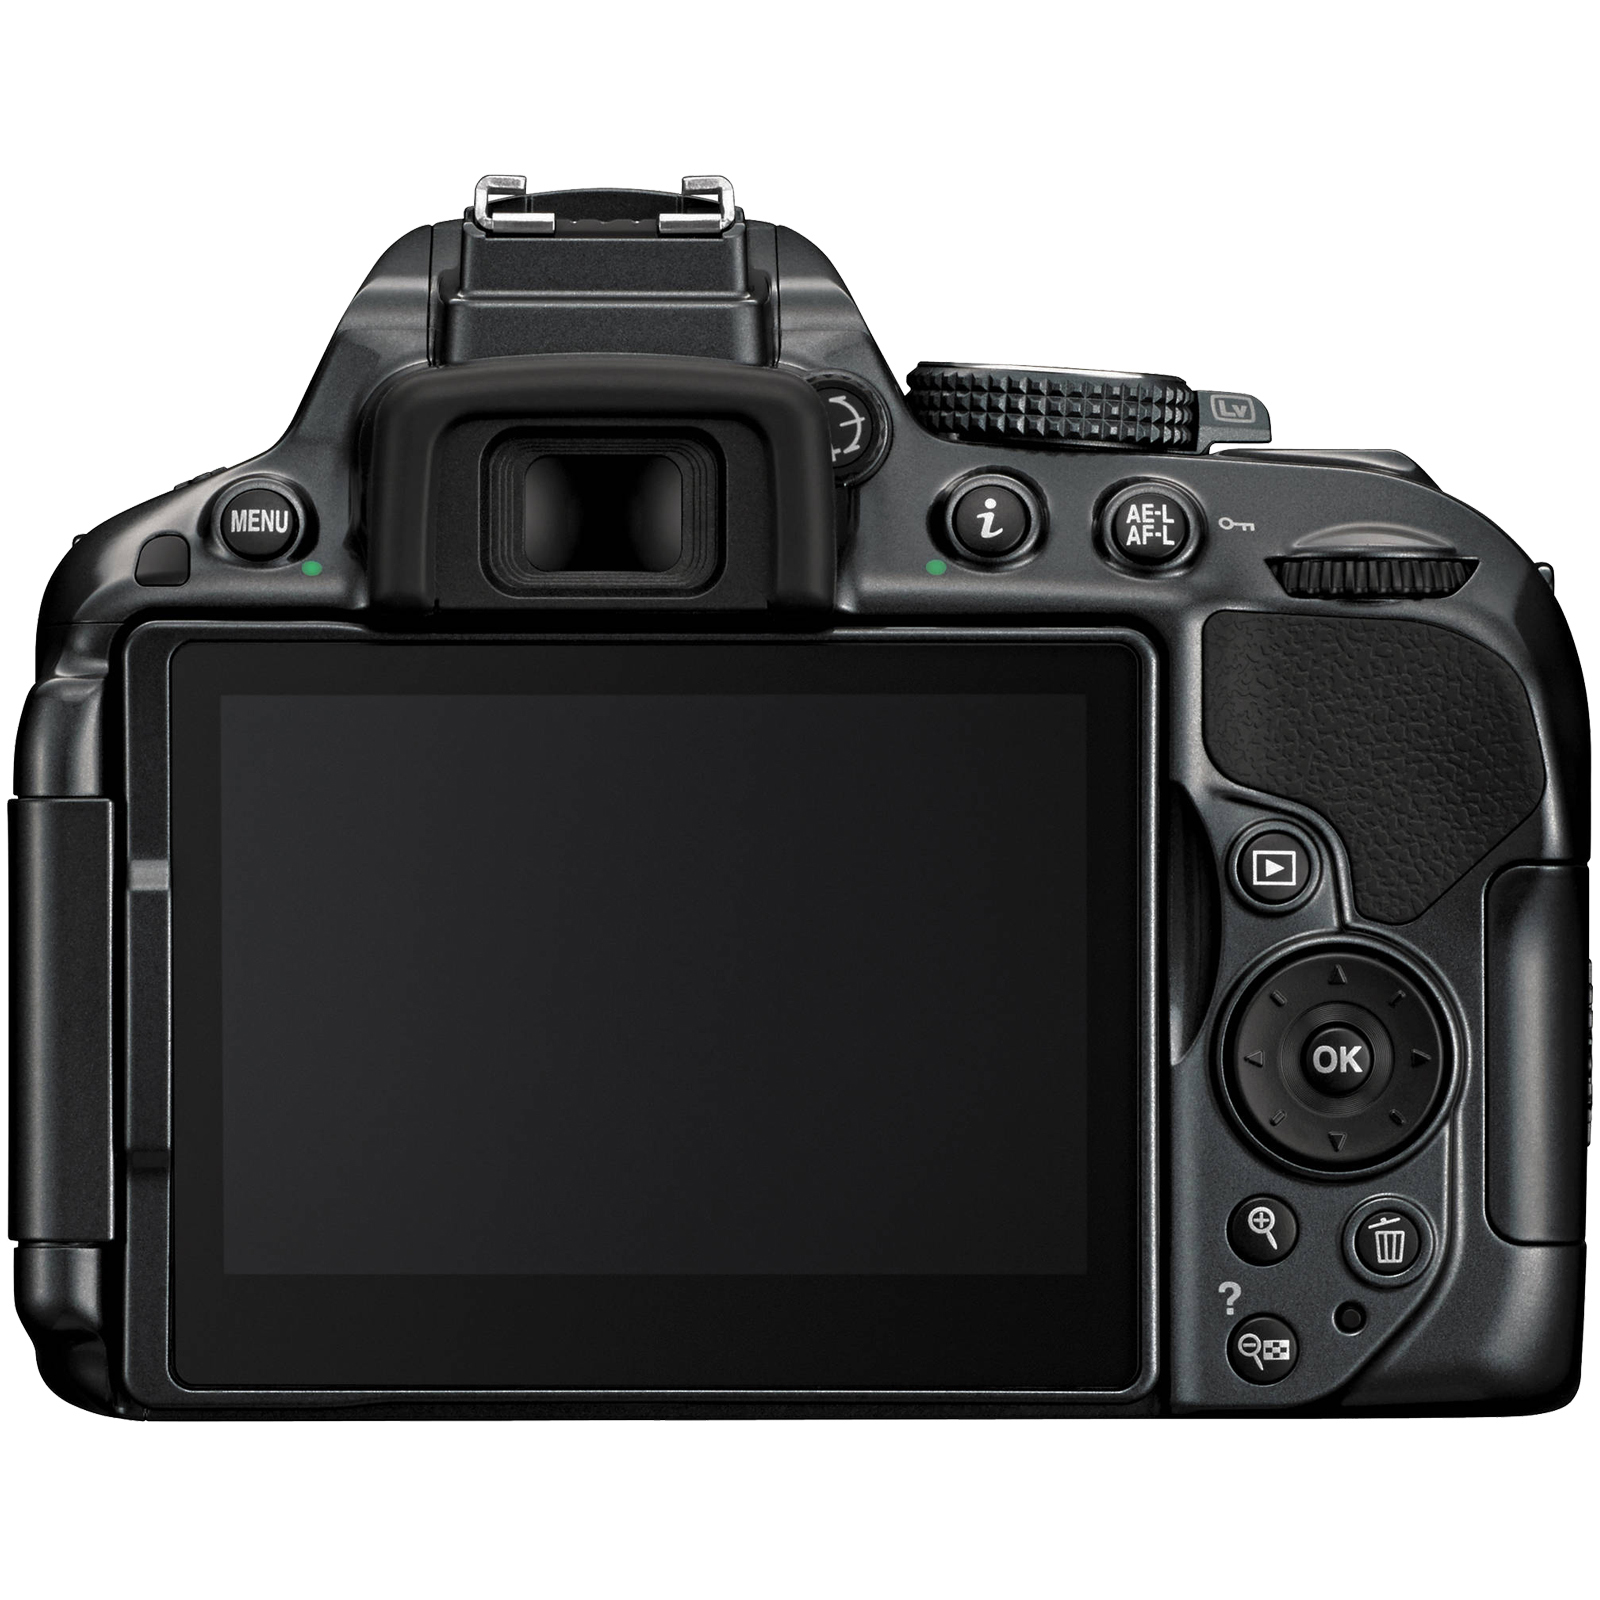 Nikon D5300 - Digital camera - SLR - 24.2 MP - APS-C - body only - Wi-Fi - black - image 4 of 4